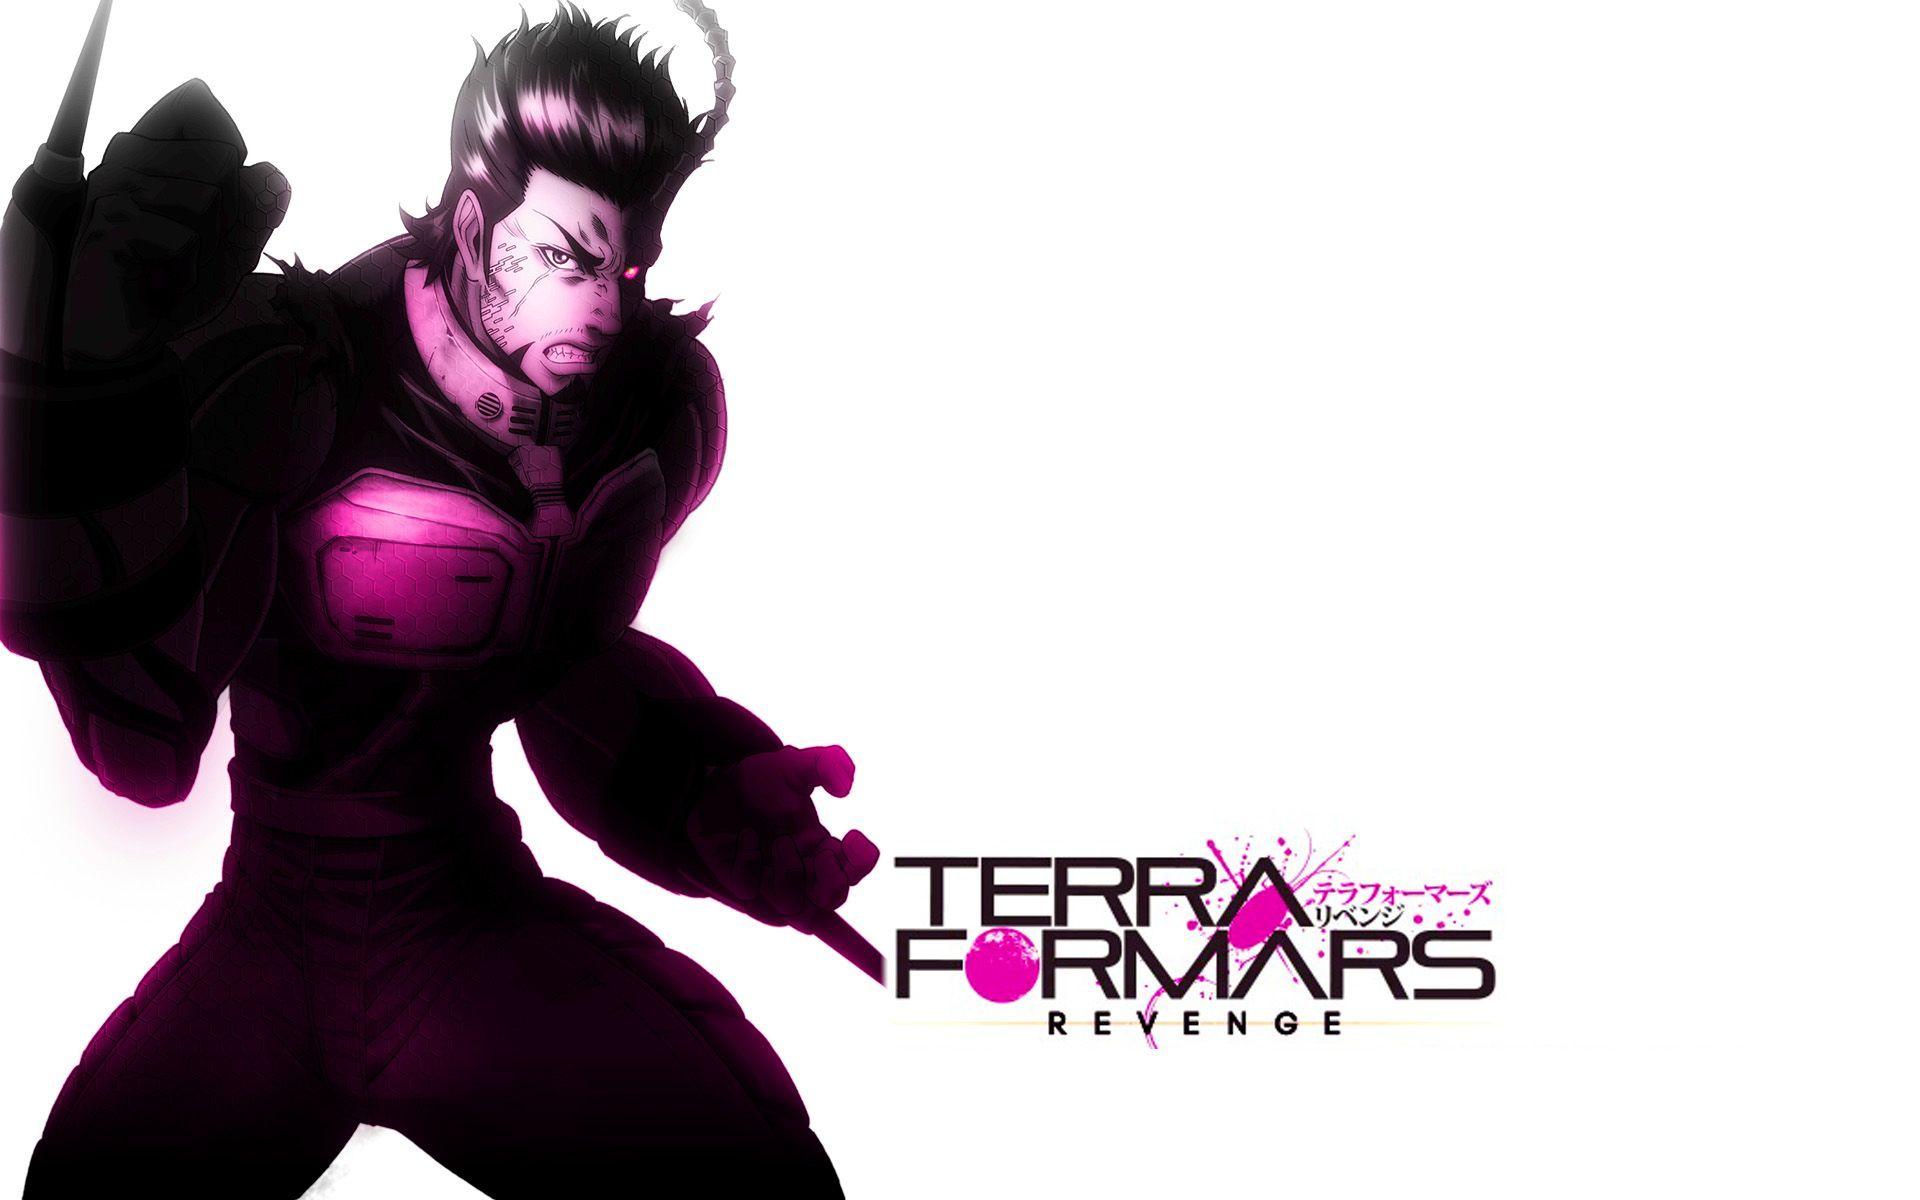 Terra Formars Revenge Komachi Shoukichi Wallpaper. Anime Wallpaper